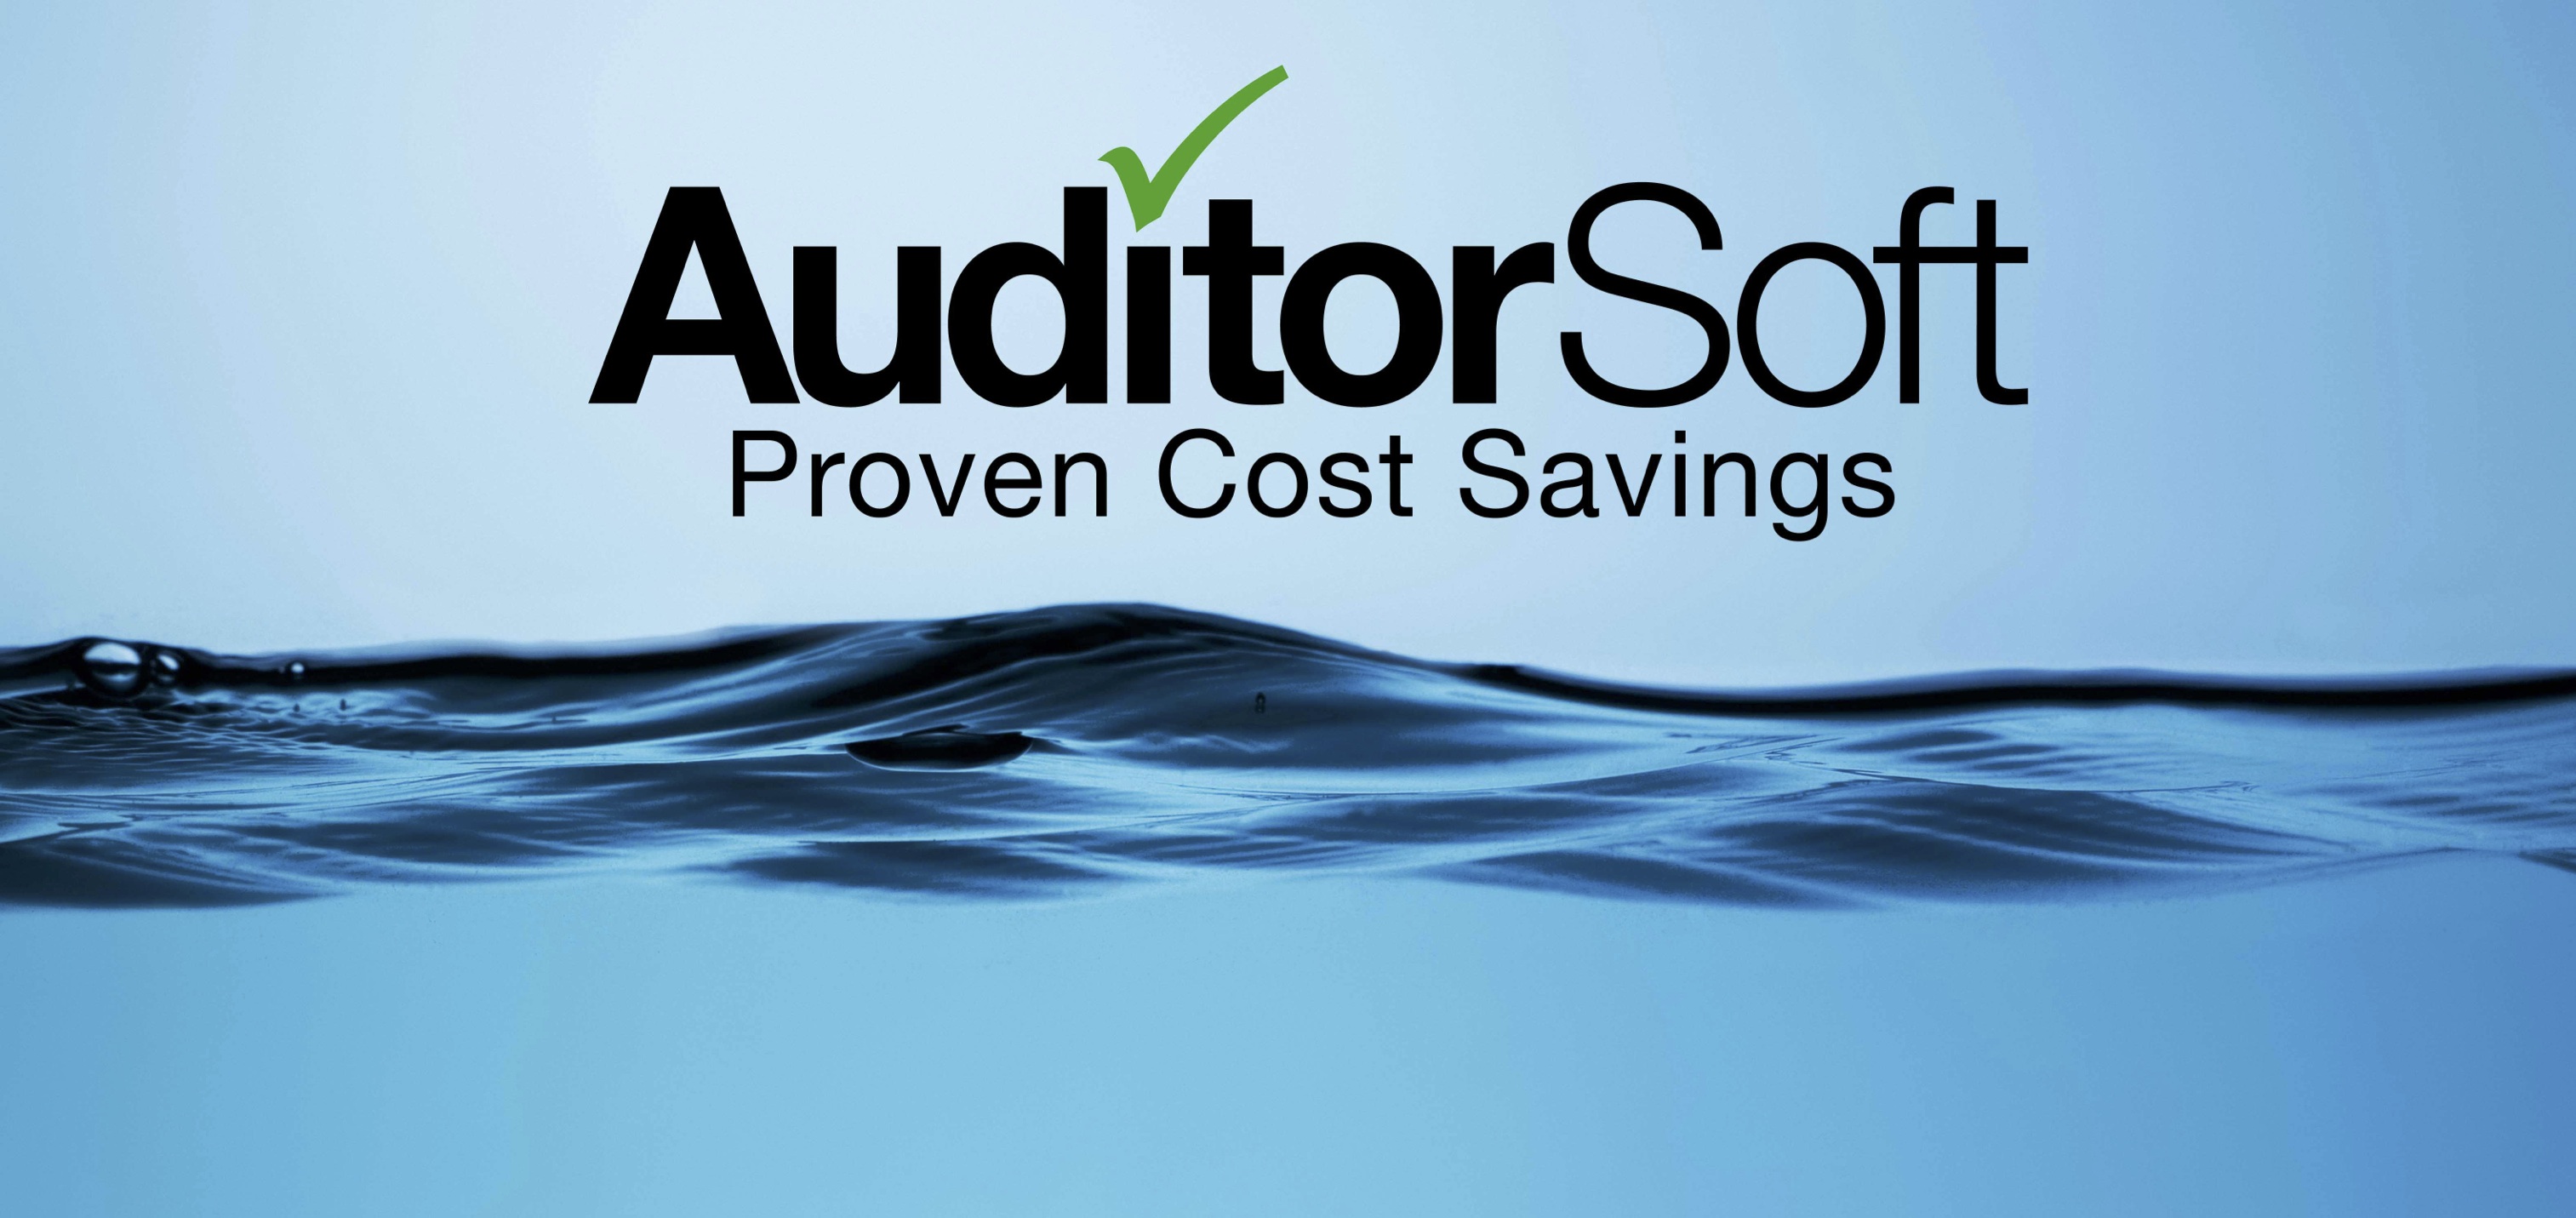 AuditorSoft-proven-cost-savings